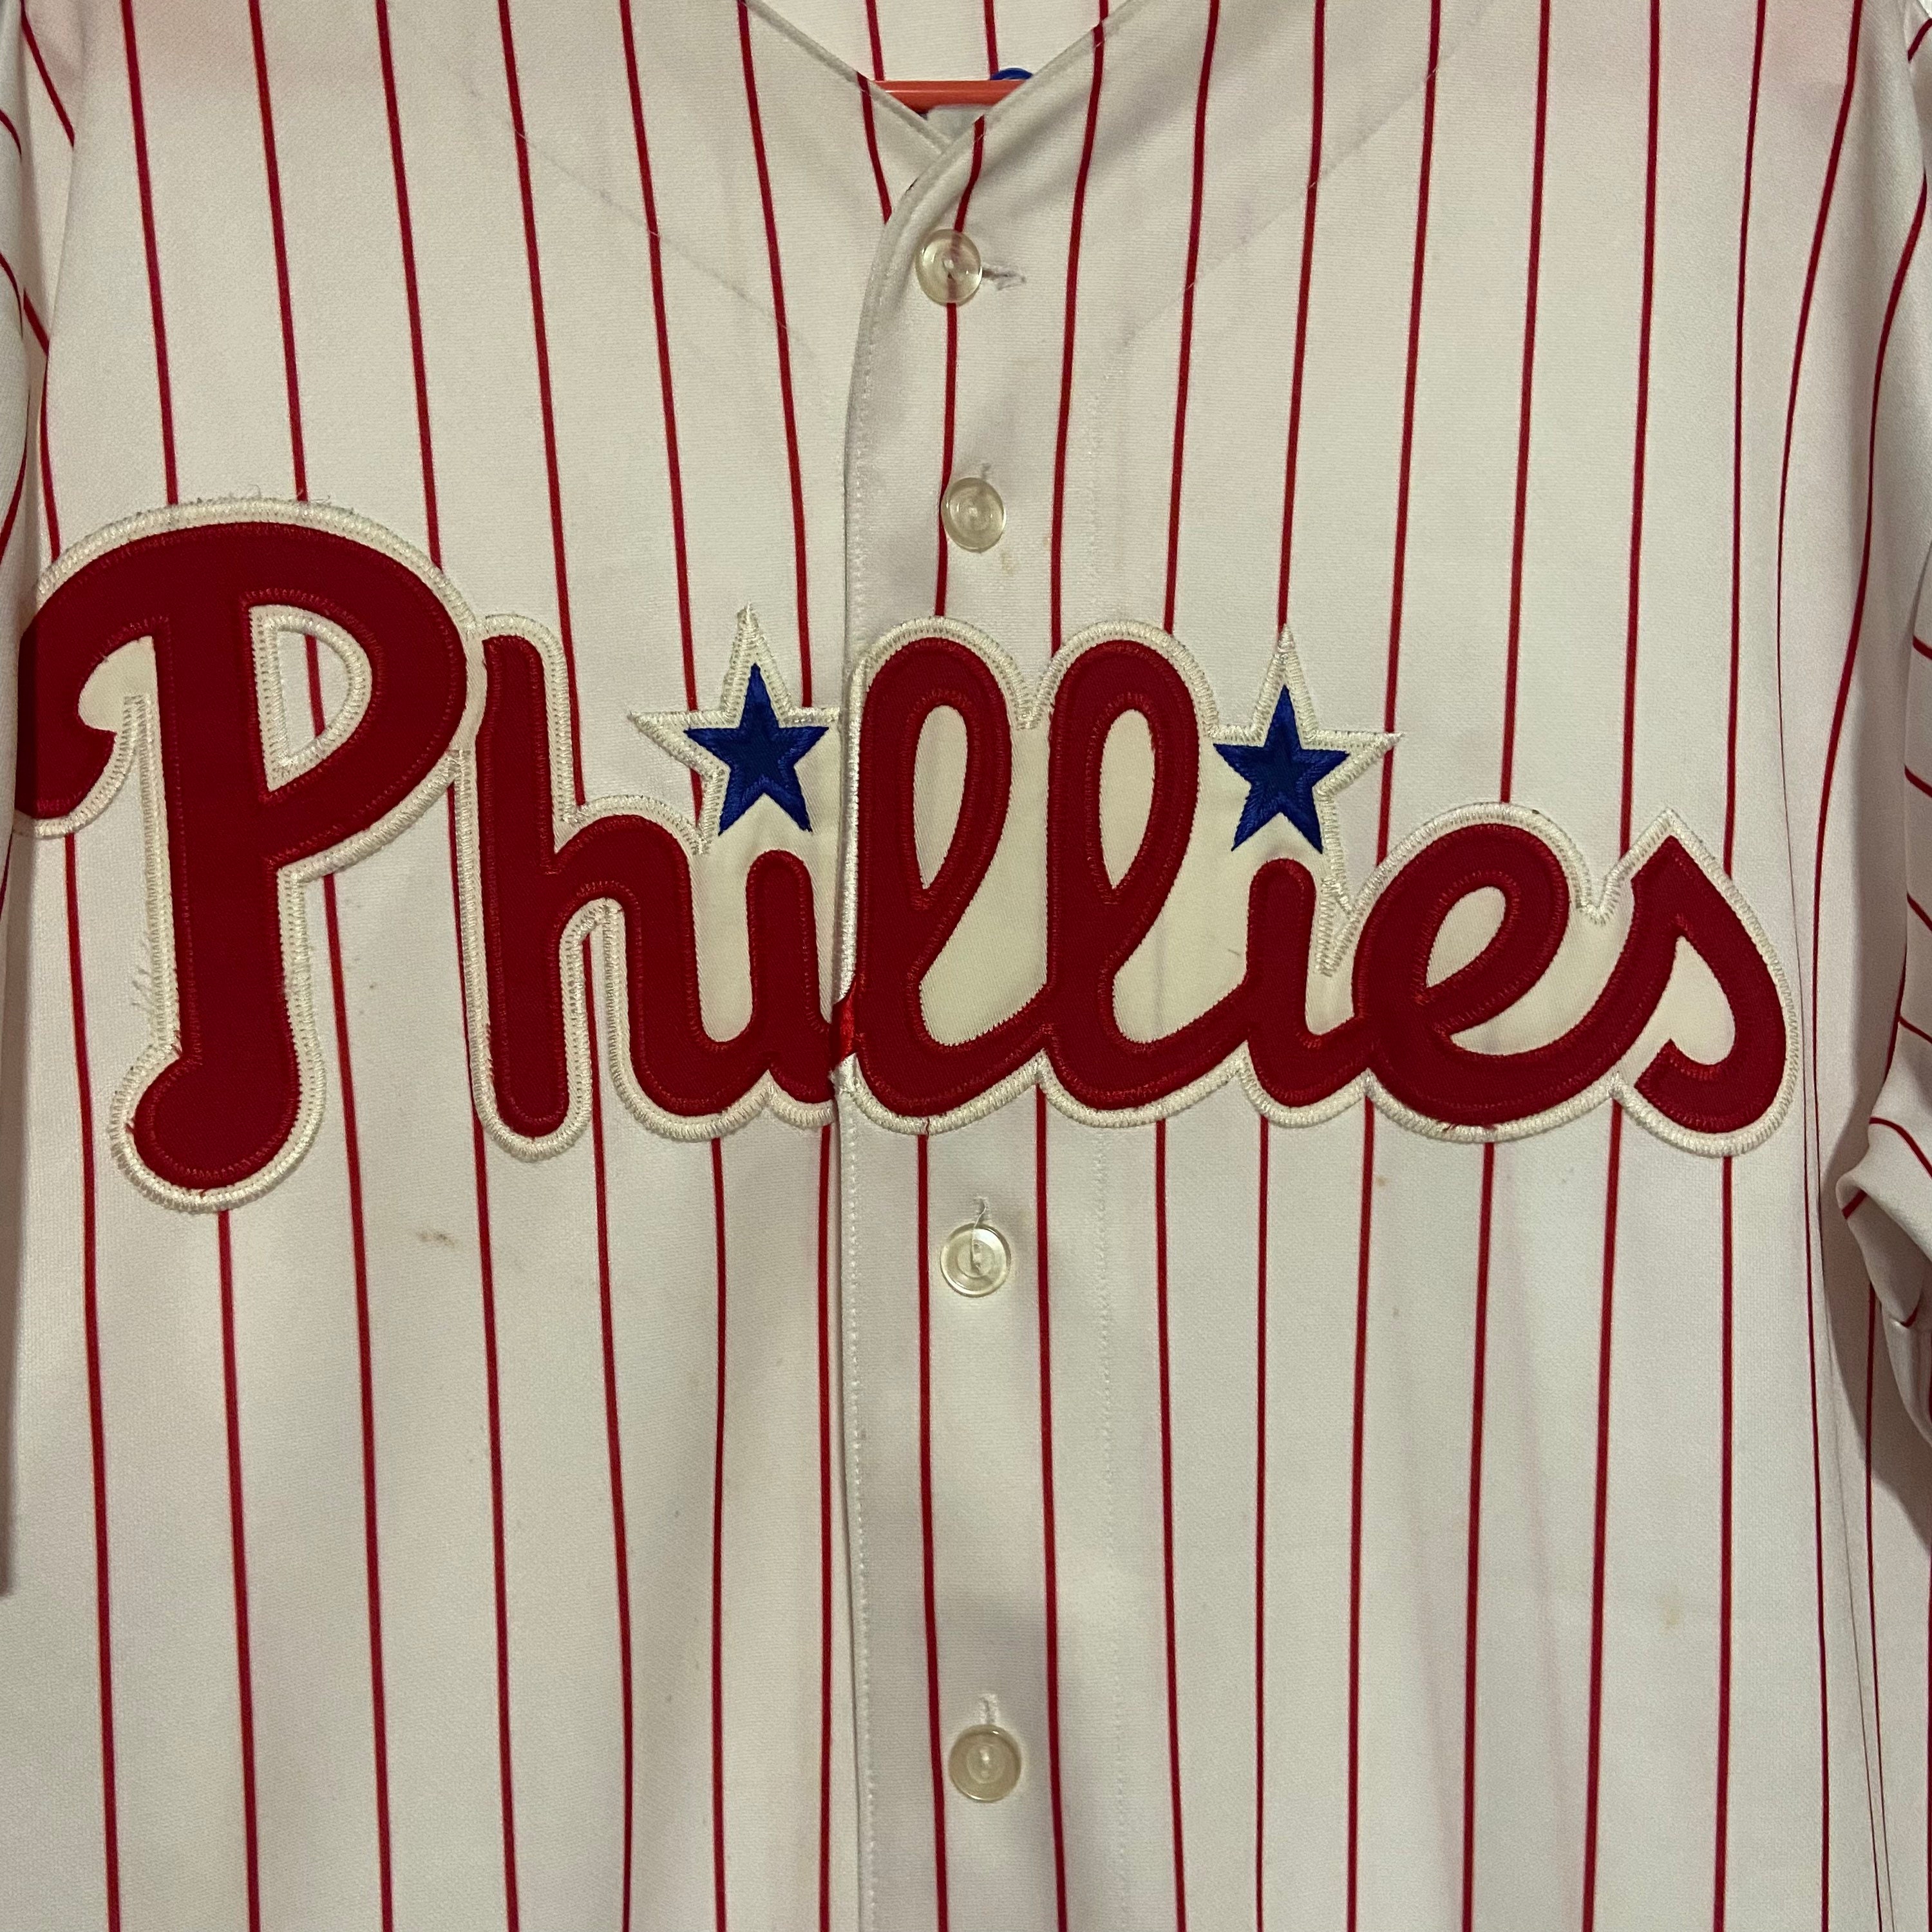 Philadelphia Phillies Alec Bohm Youth Light Blue Cooperstown Replica  Baseball Jersey